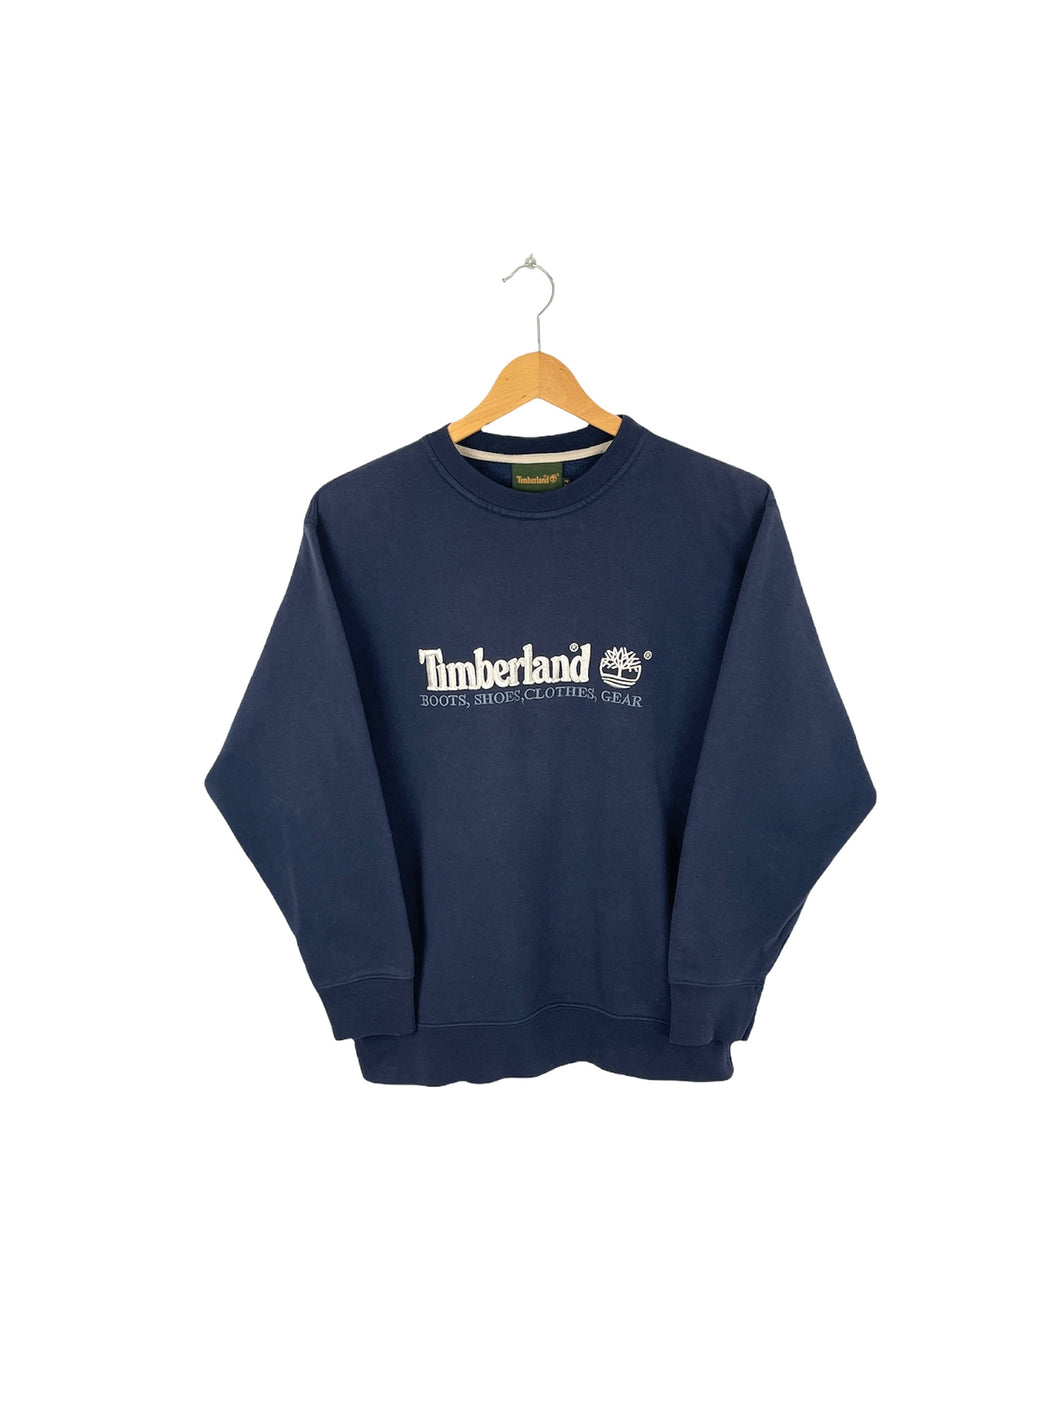 Timberland Sweatshirt - XSmall